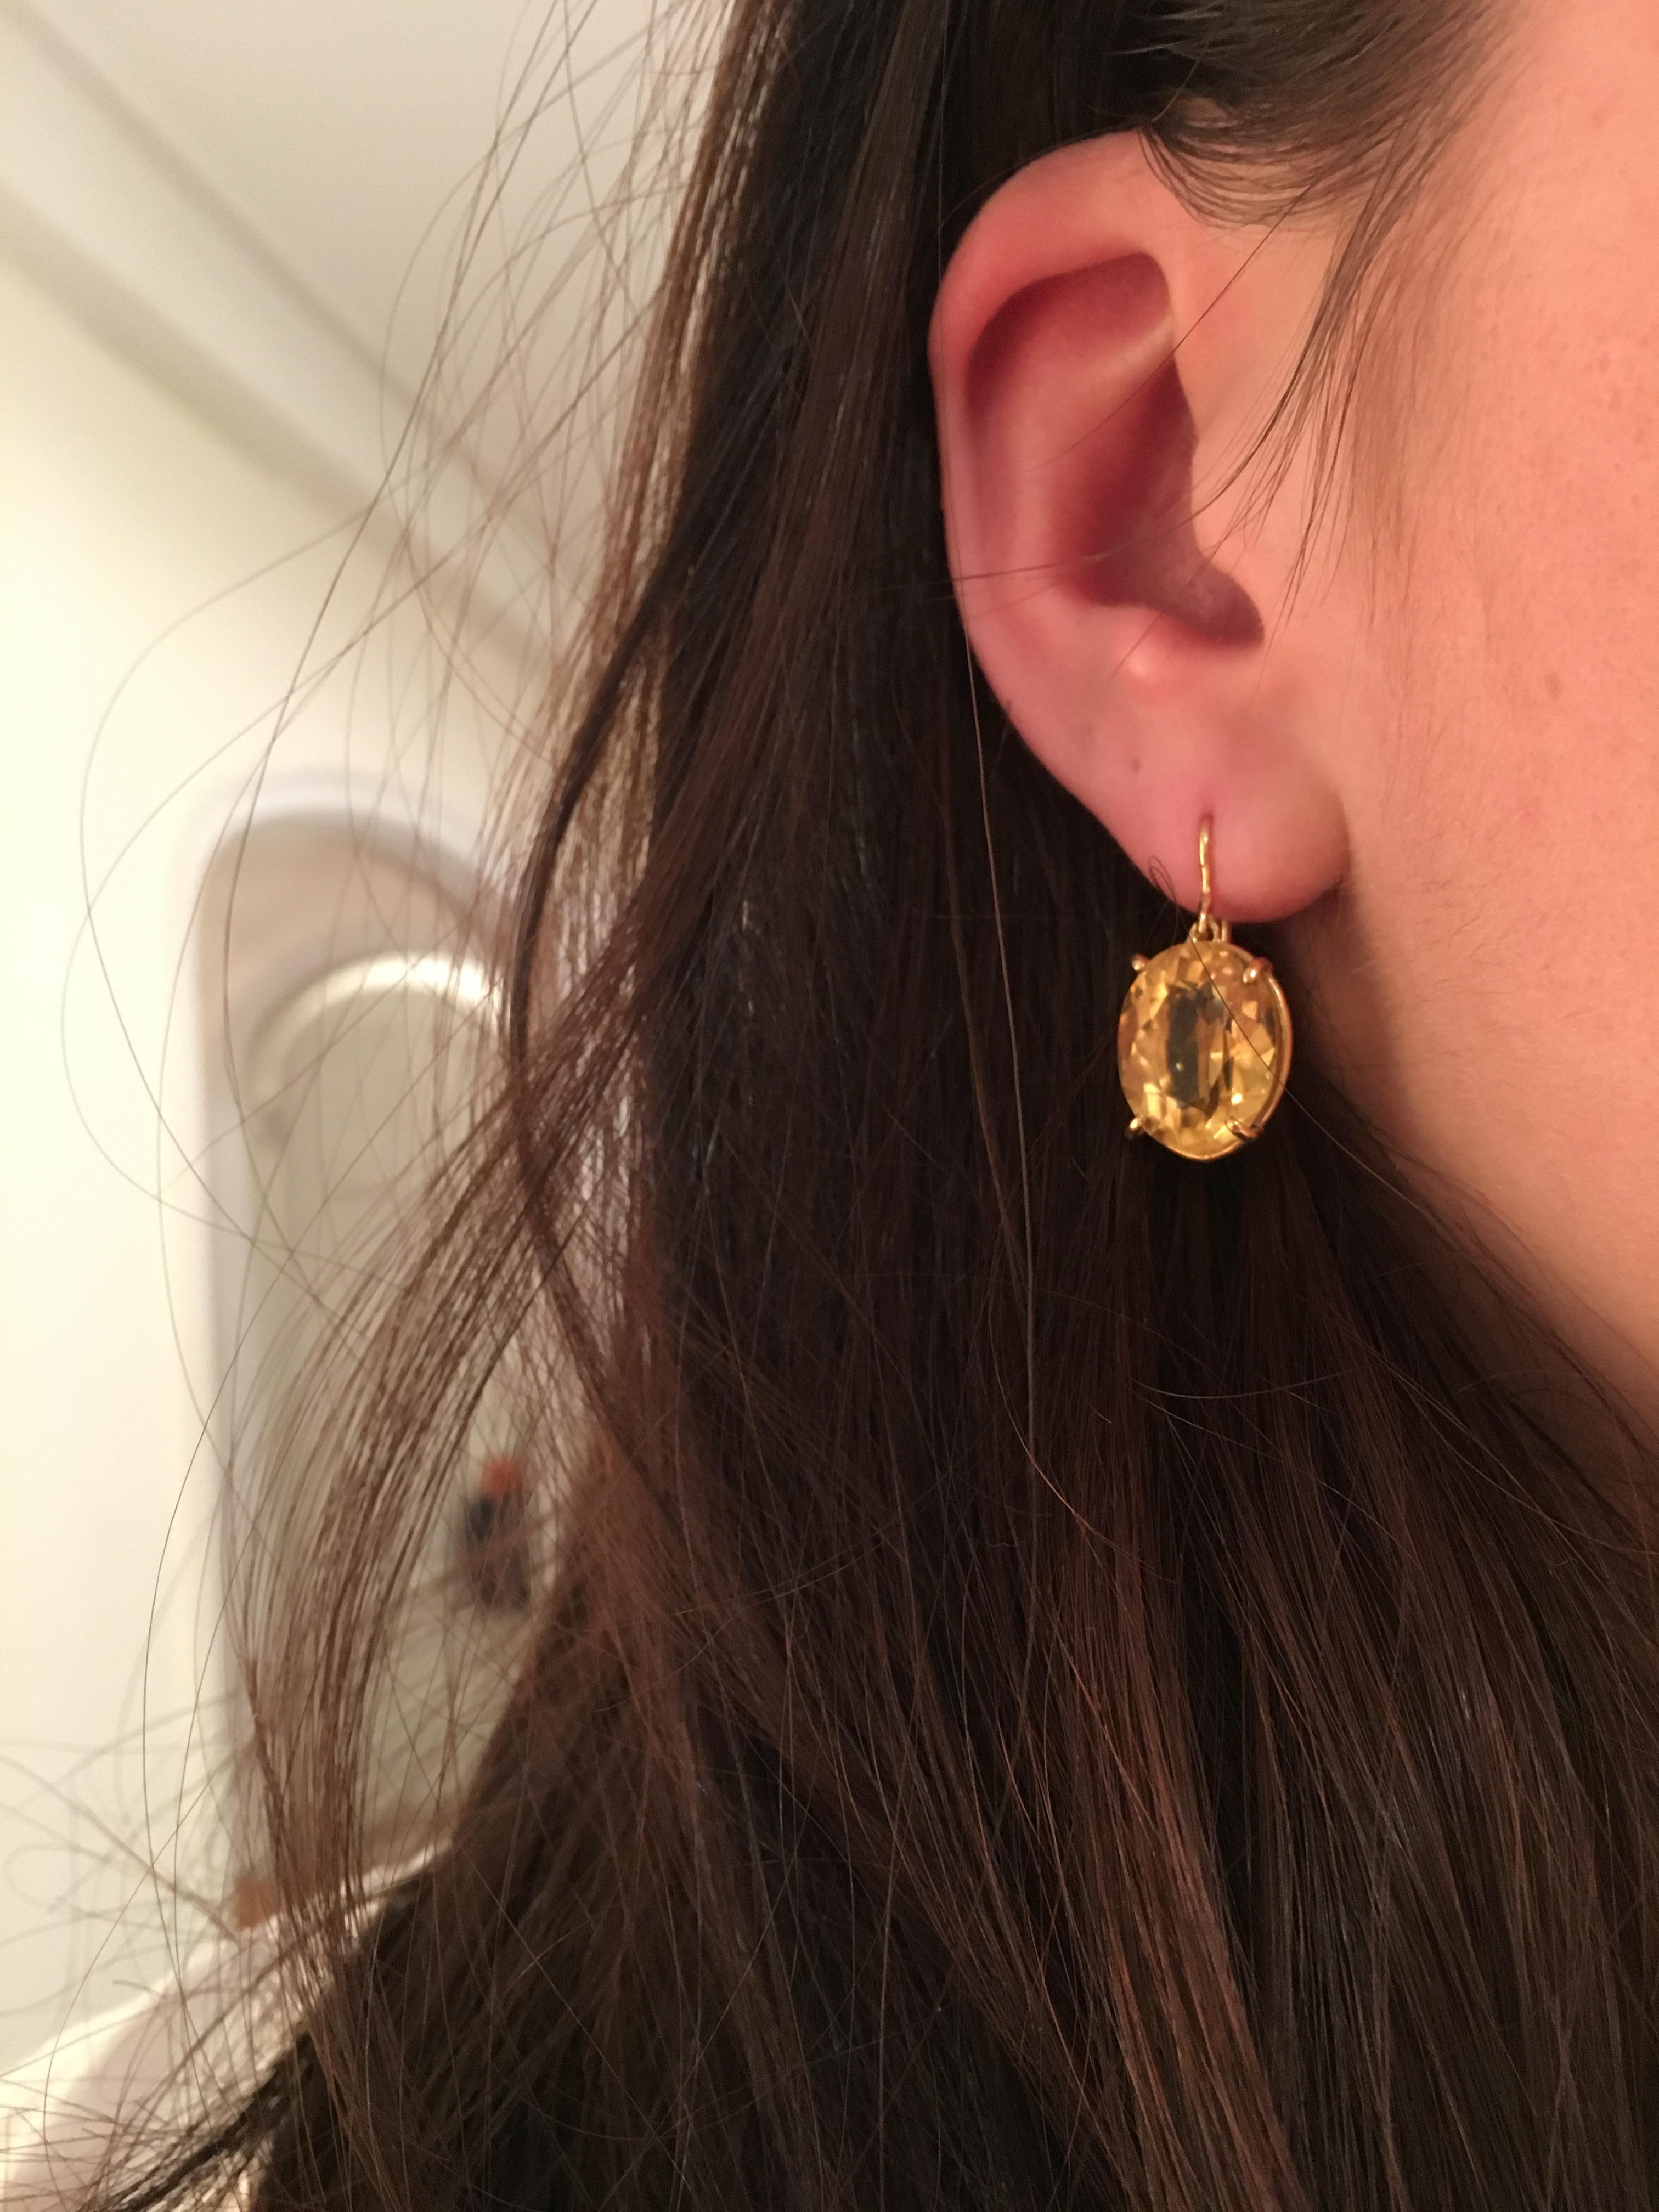 stone earrings hanging